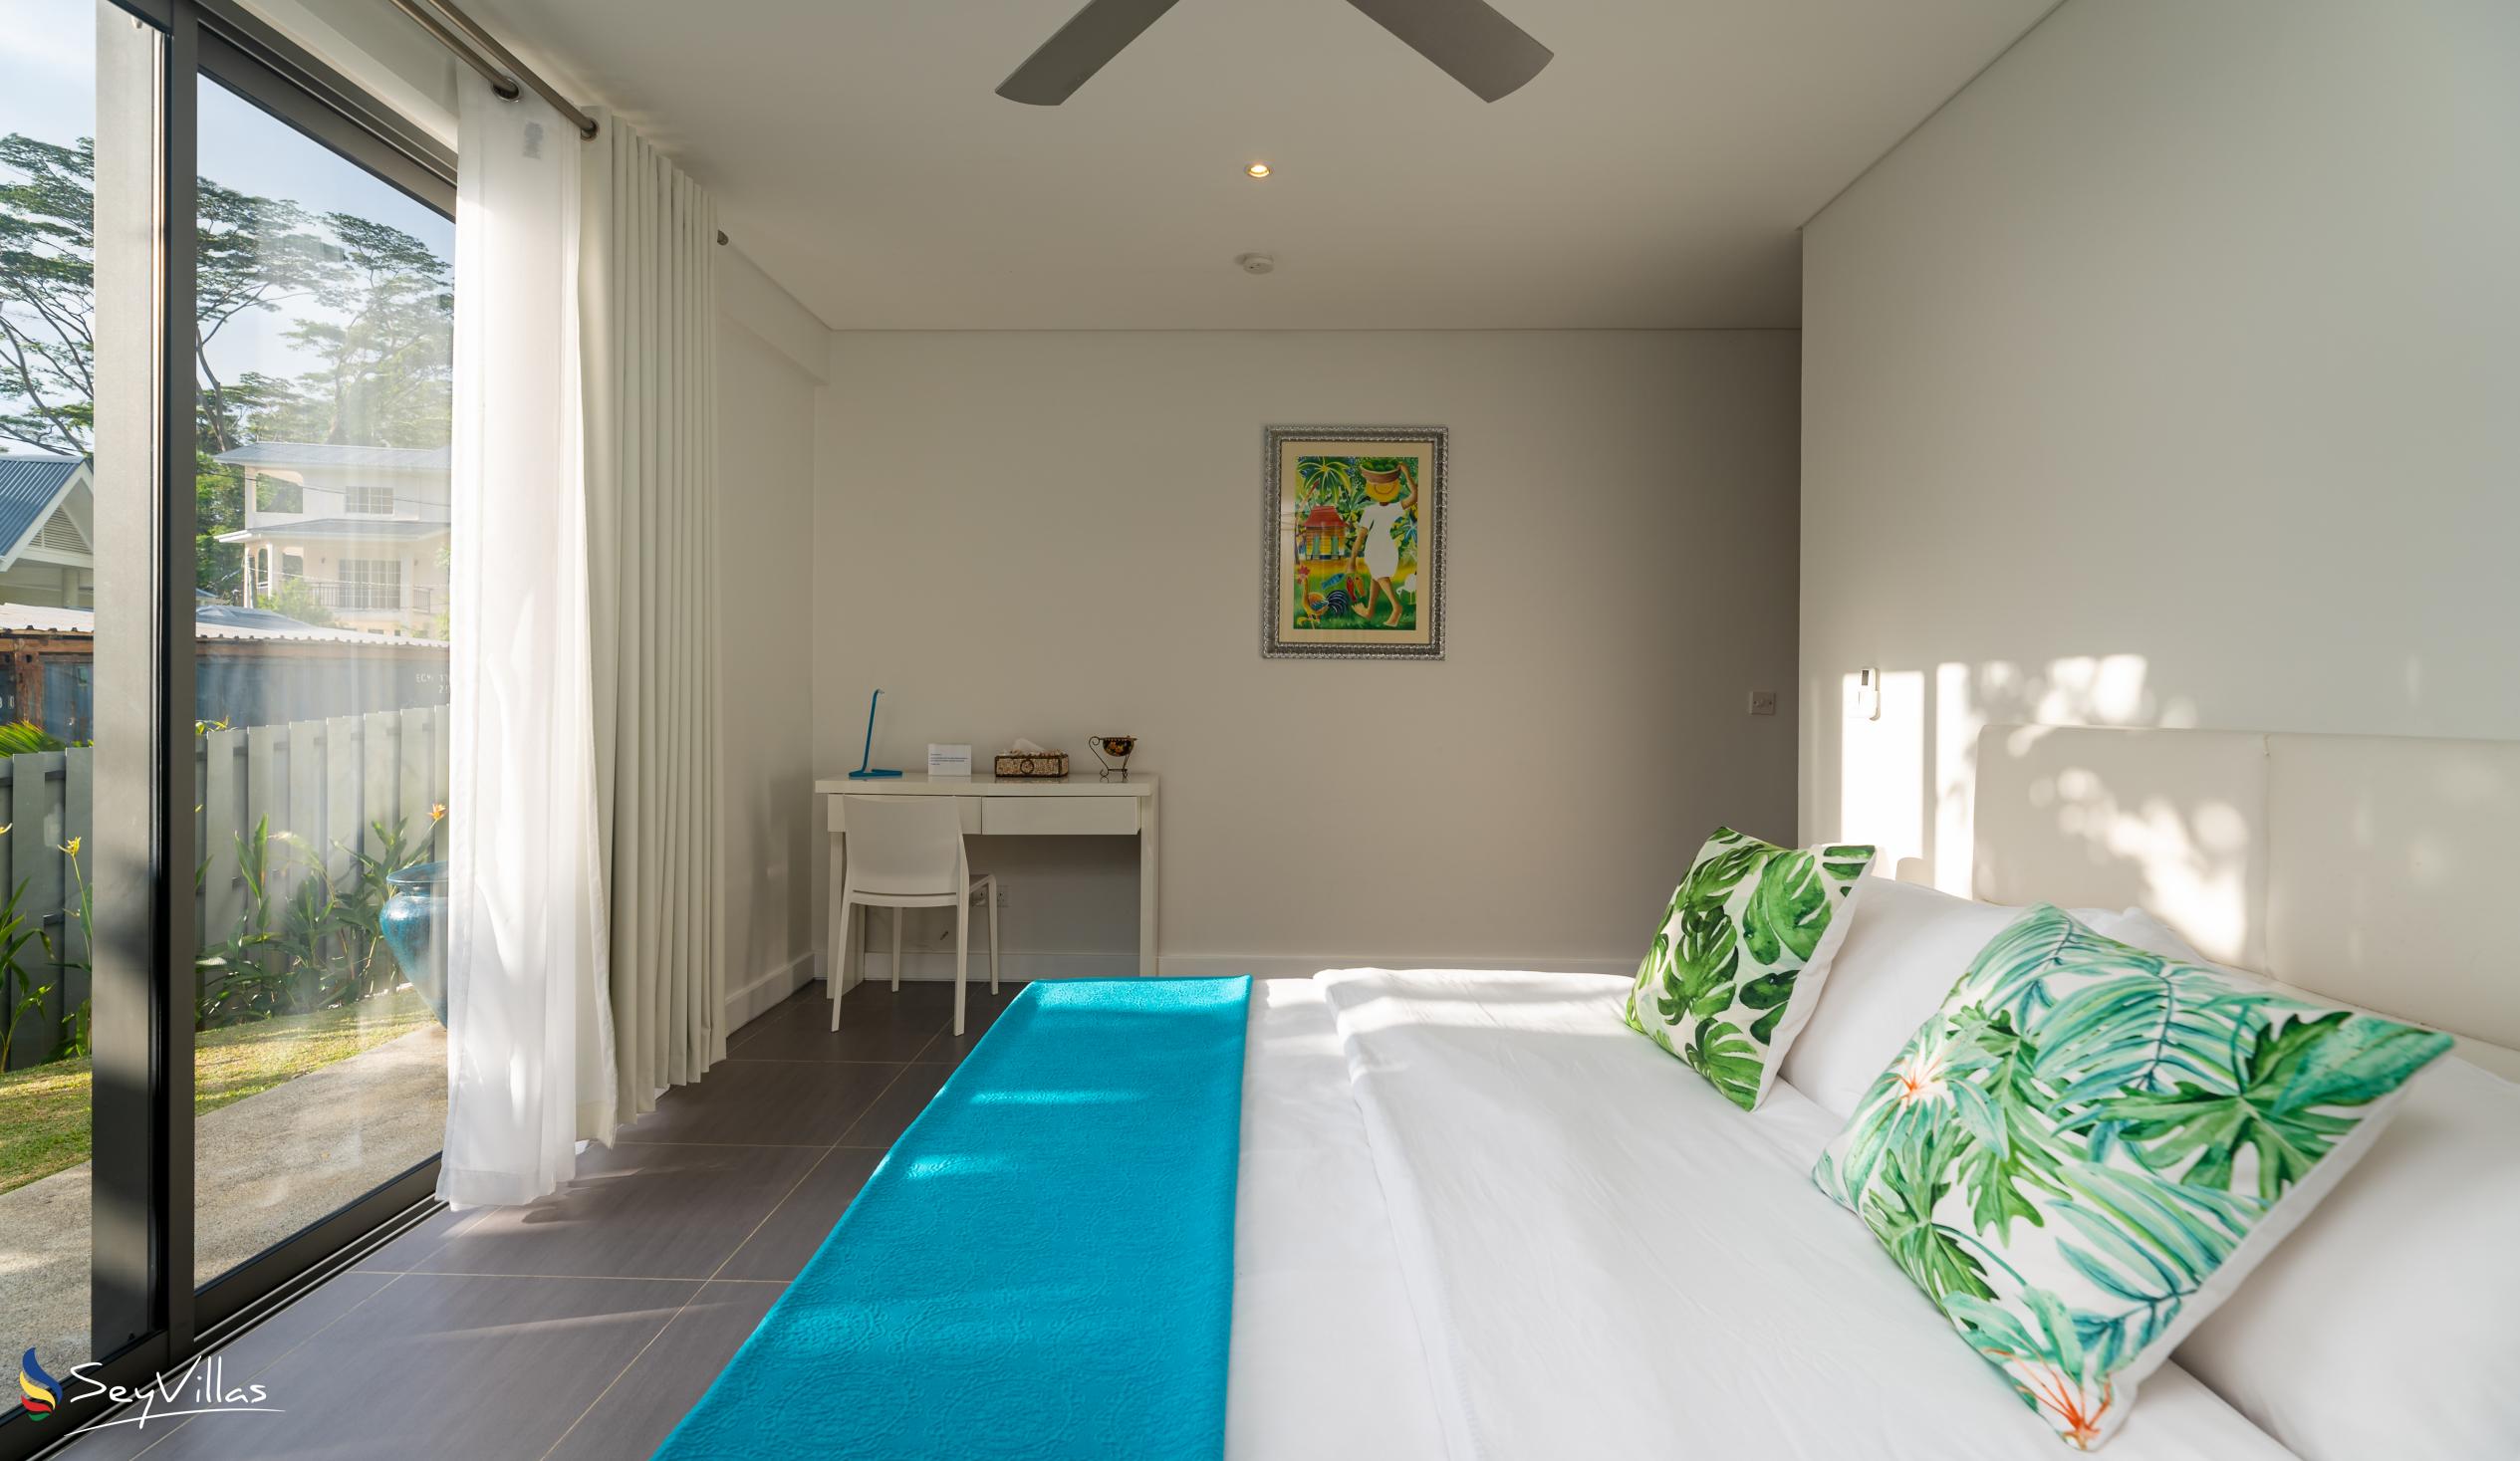 Photo 79: Roz Avel Villa - 2-Bedroom Villa - Mahé (Seychelles)